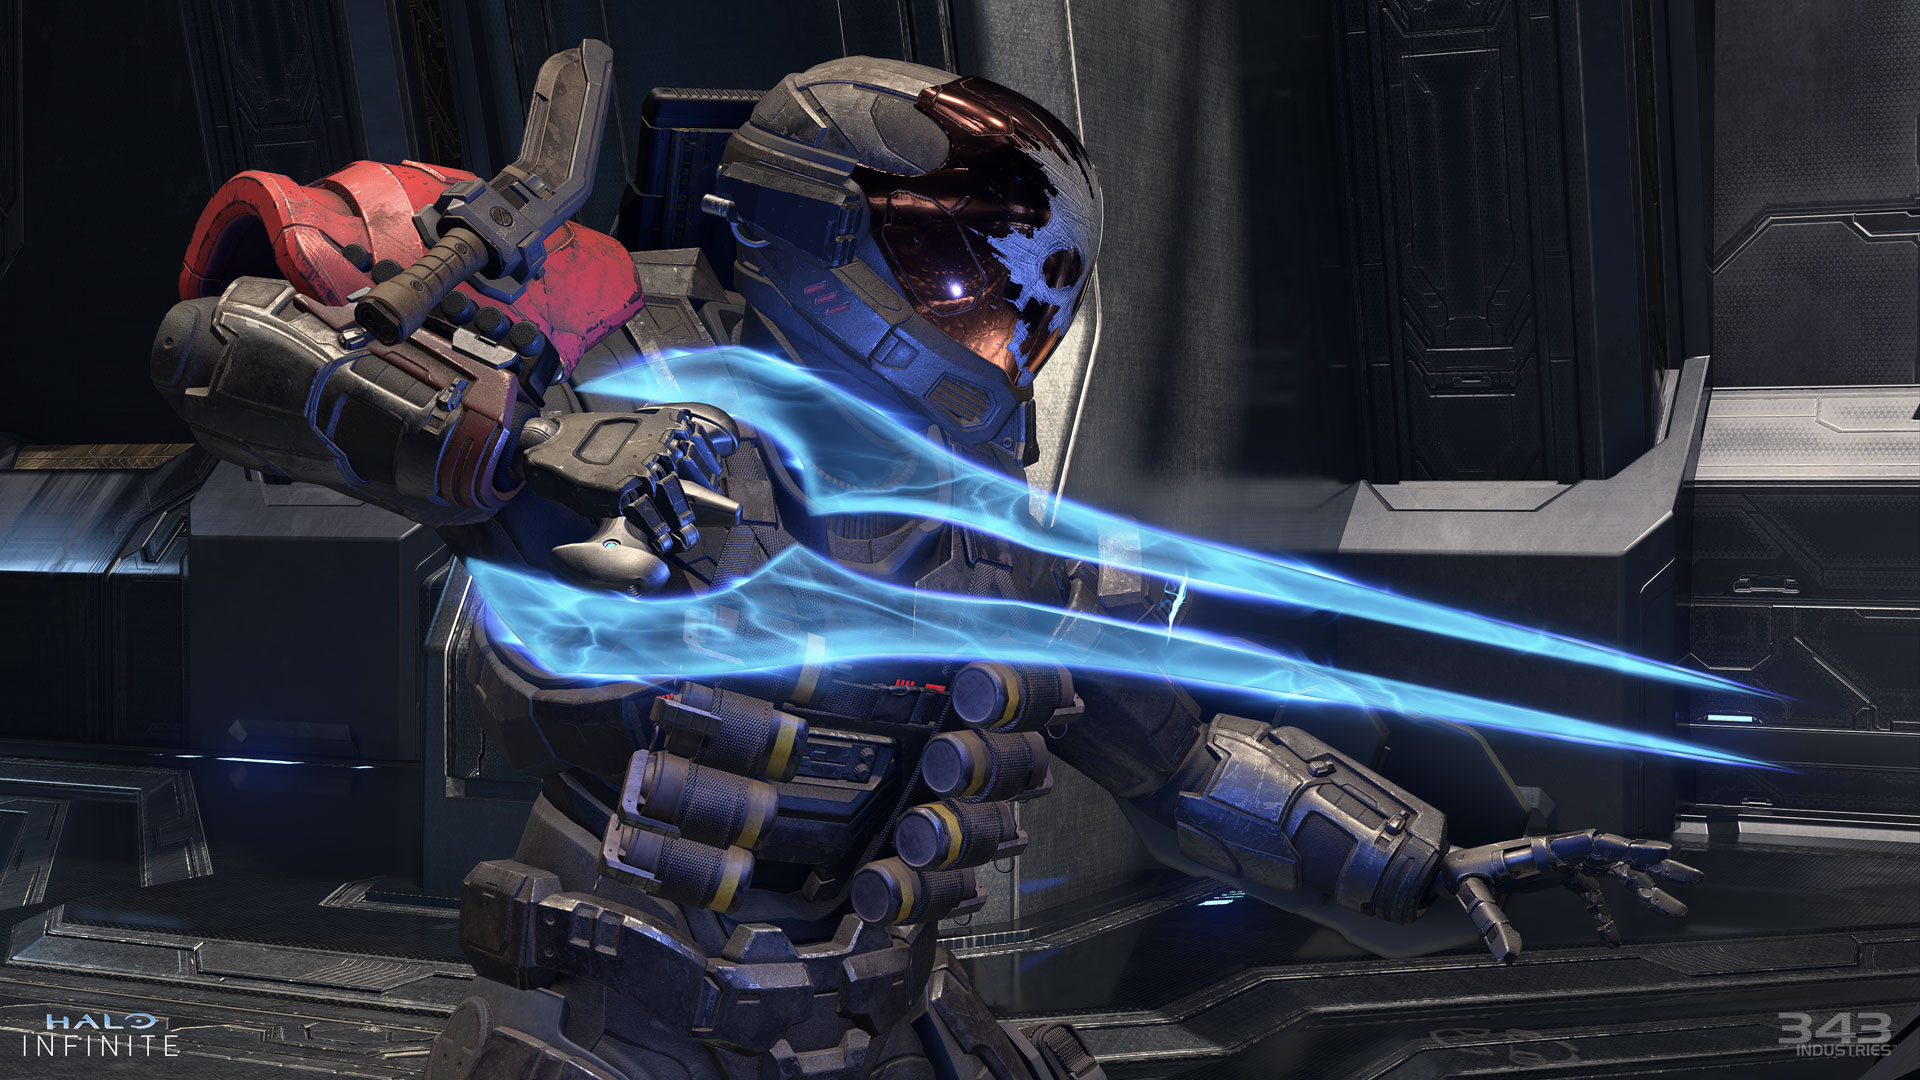 A Halo Infinite képernyőfotója a Spartan harcot mutatja be